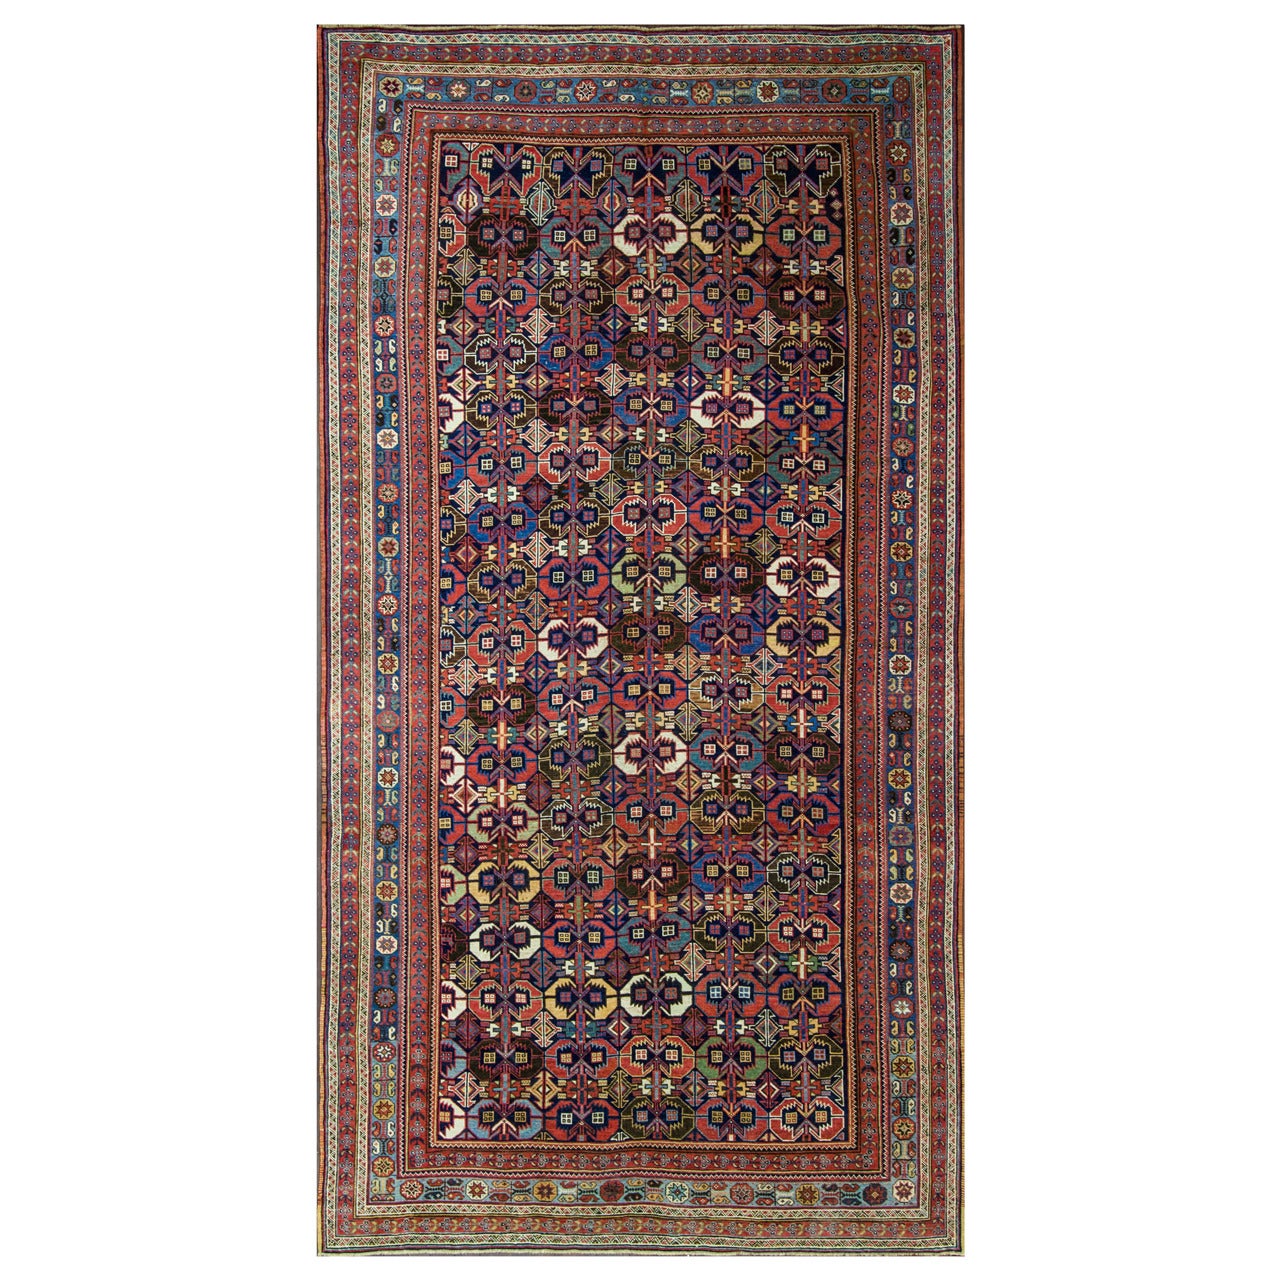 Antique Persian Afshar Carpet, 4'10" x 9'4"